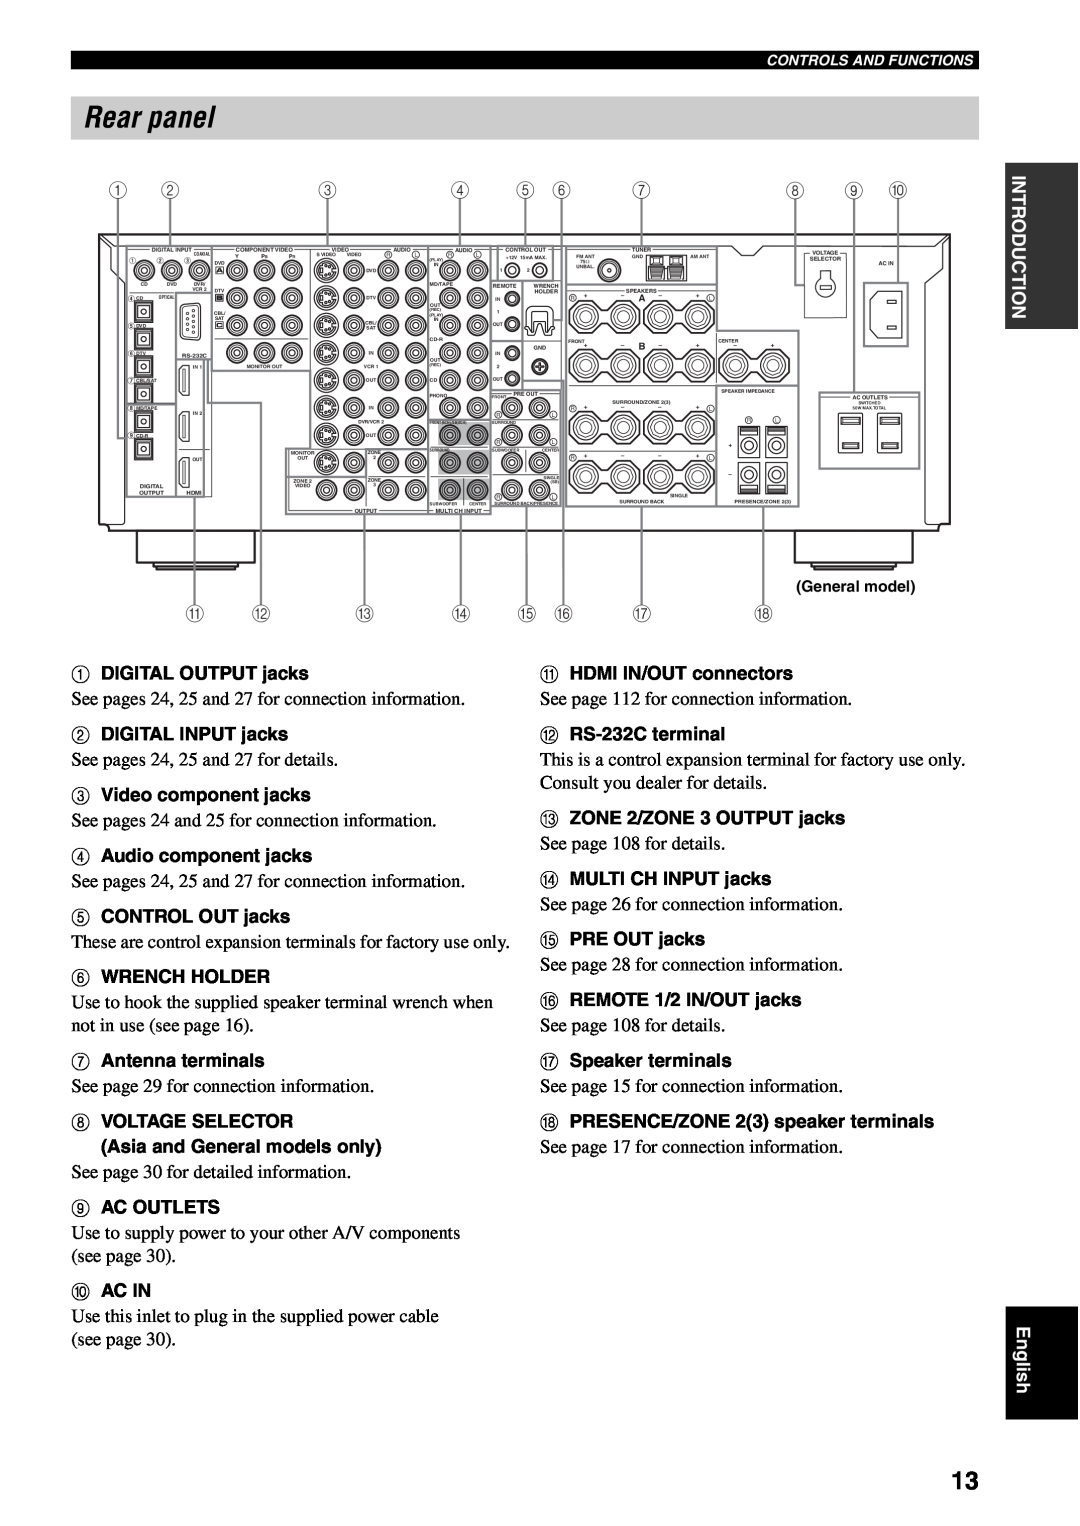 Yamaha RX-V2600 Rear panel, DIGITAL OUTPUT jacks, DIGITAL INPUT jacks, Video component jacks, Audio component jacks, Ac In 